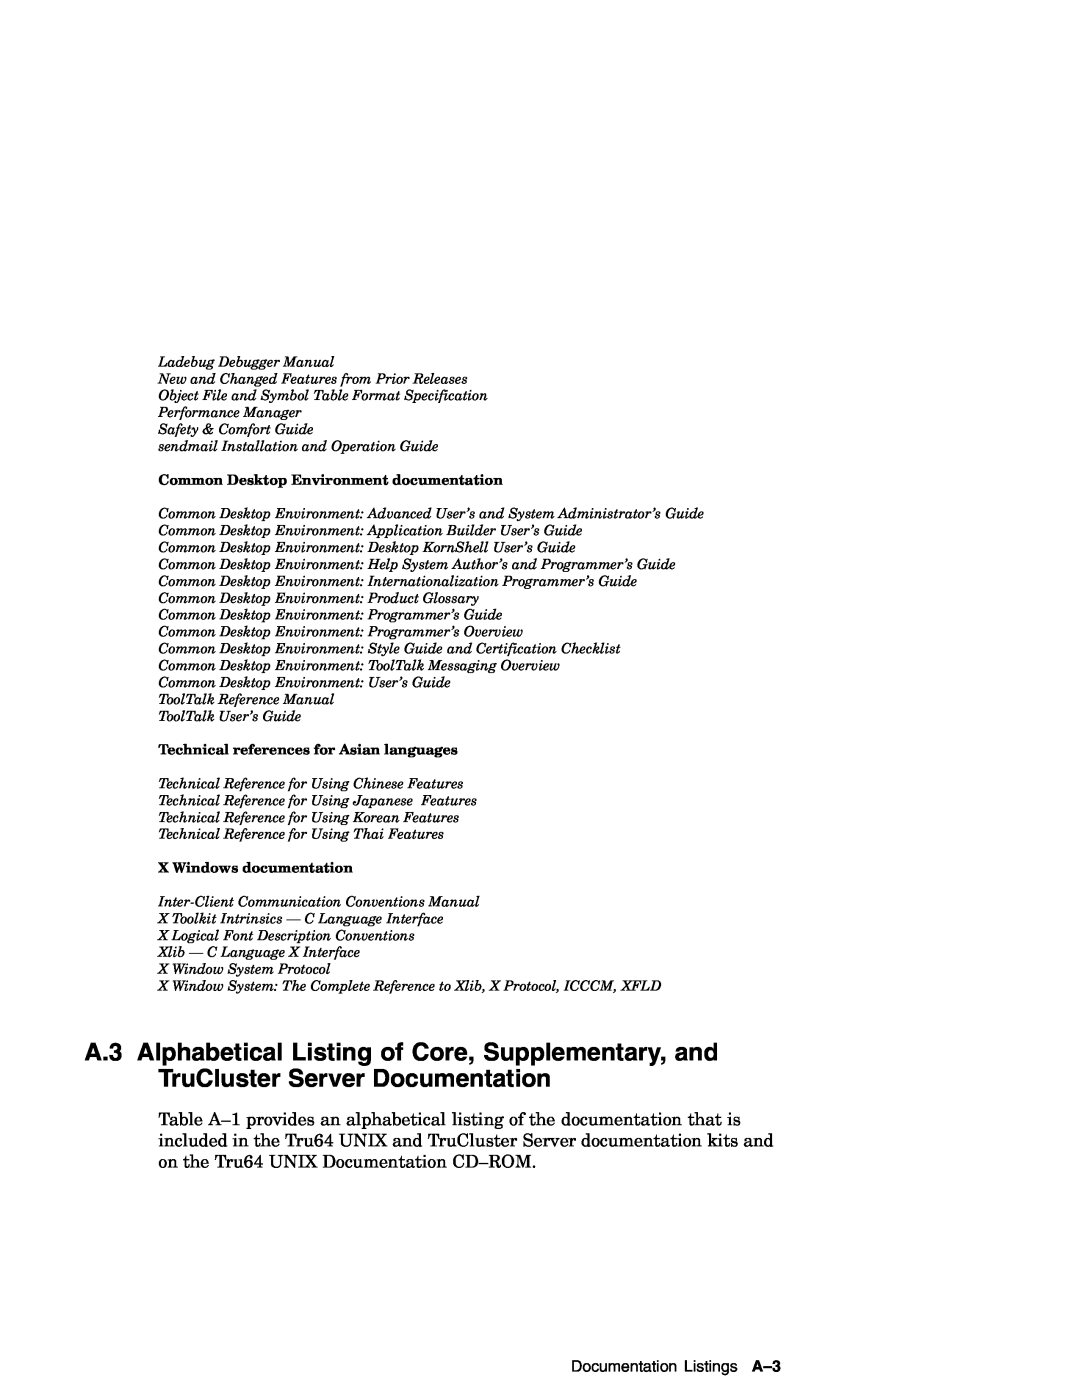 Compaq AA-RH8RD-TE manual Documentation Listings A-3, Common Desktop Environment documentation, X Windows documentation 